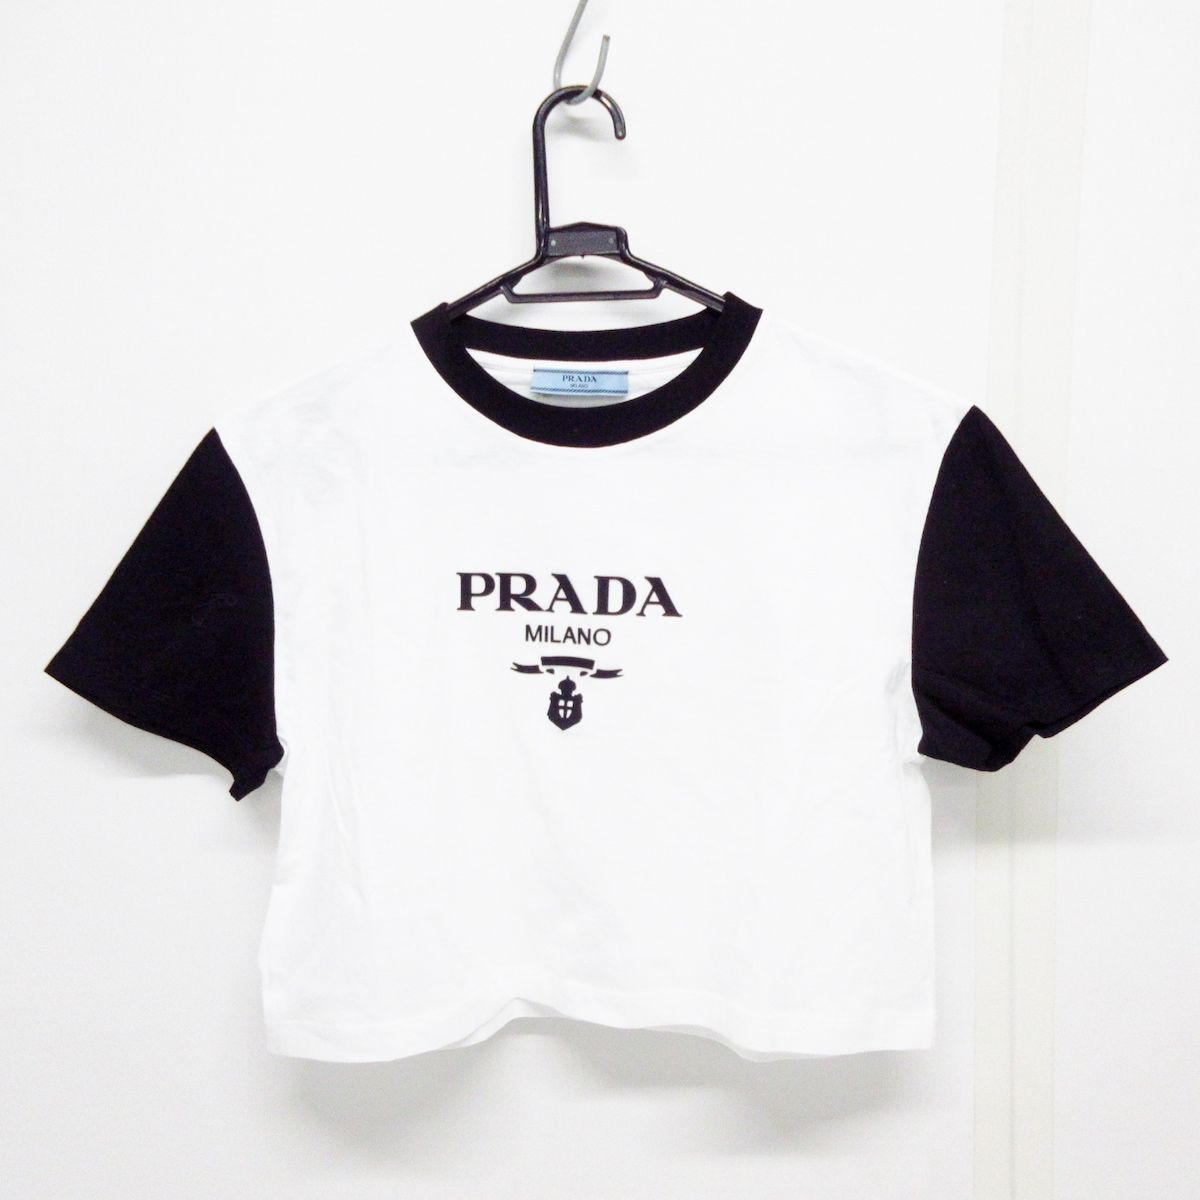 PRADA(プラダ) 半袖Tシャツ美品 - 白×黒 バイカラー/クルーネック